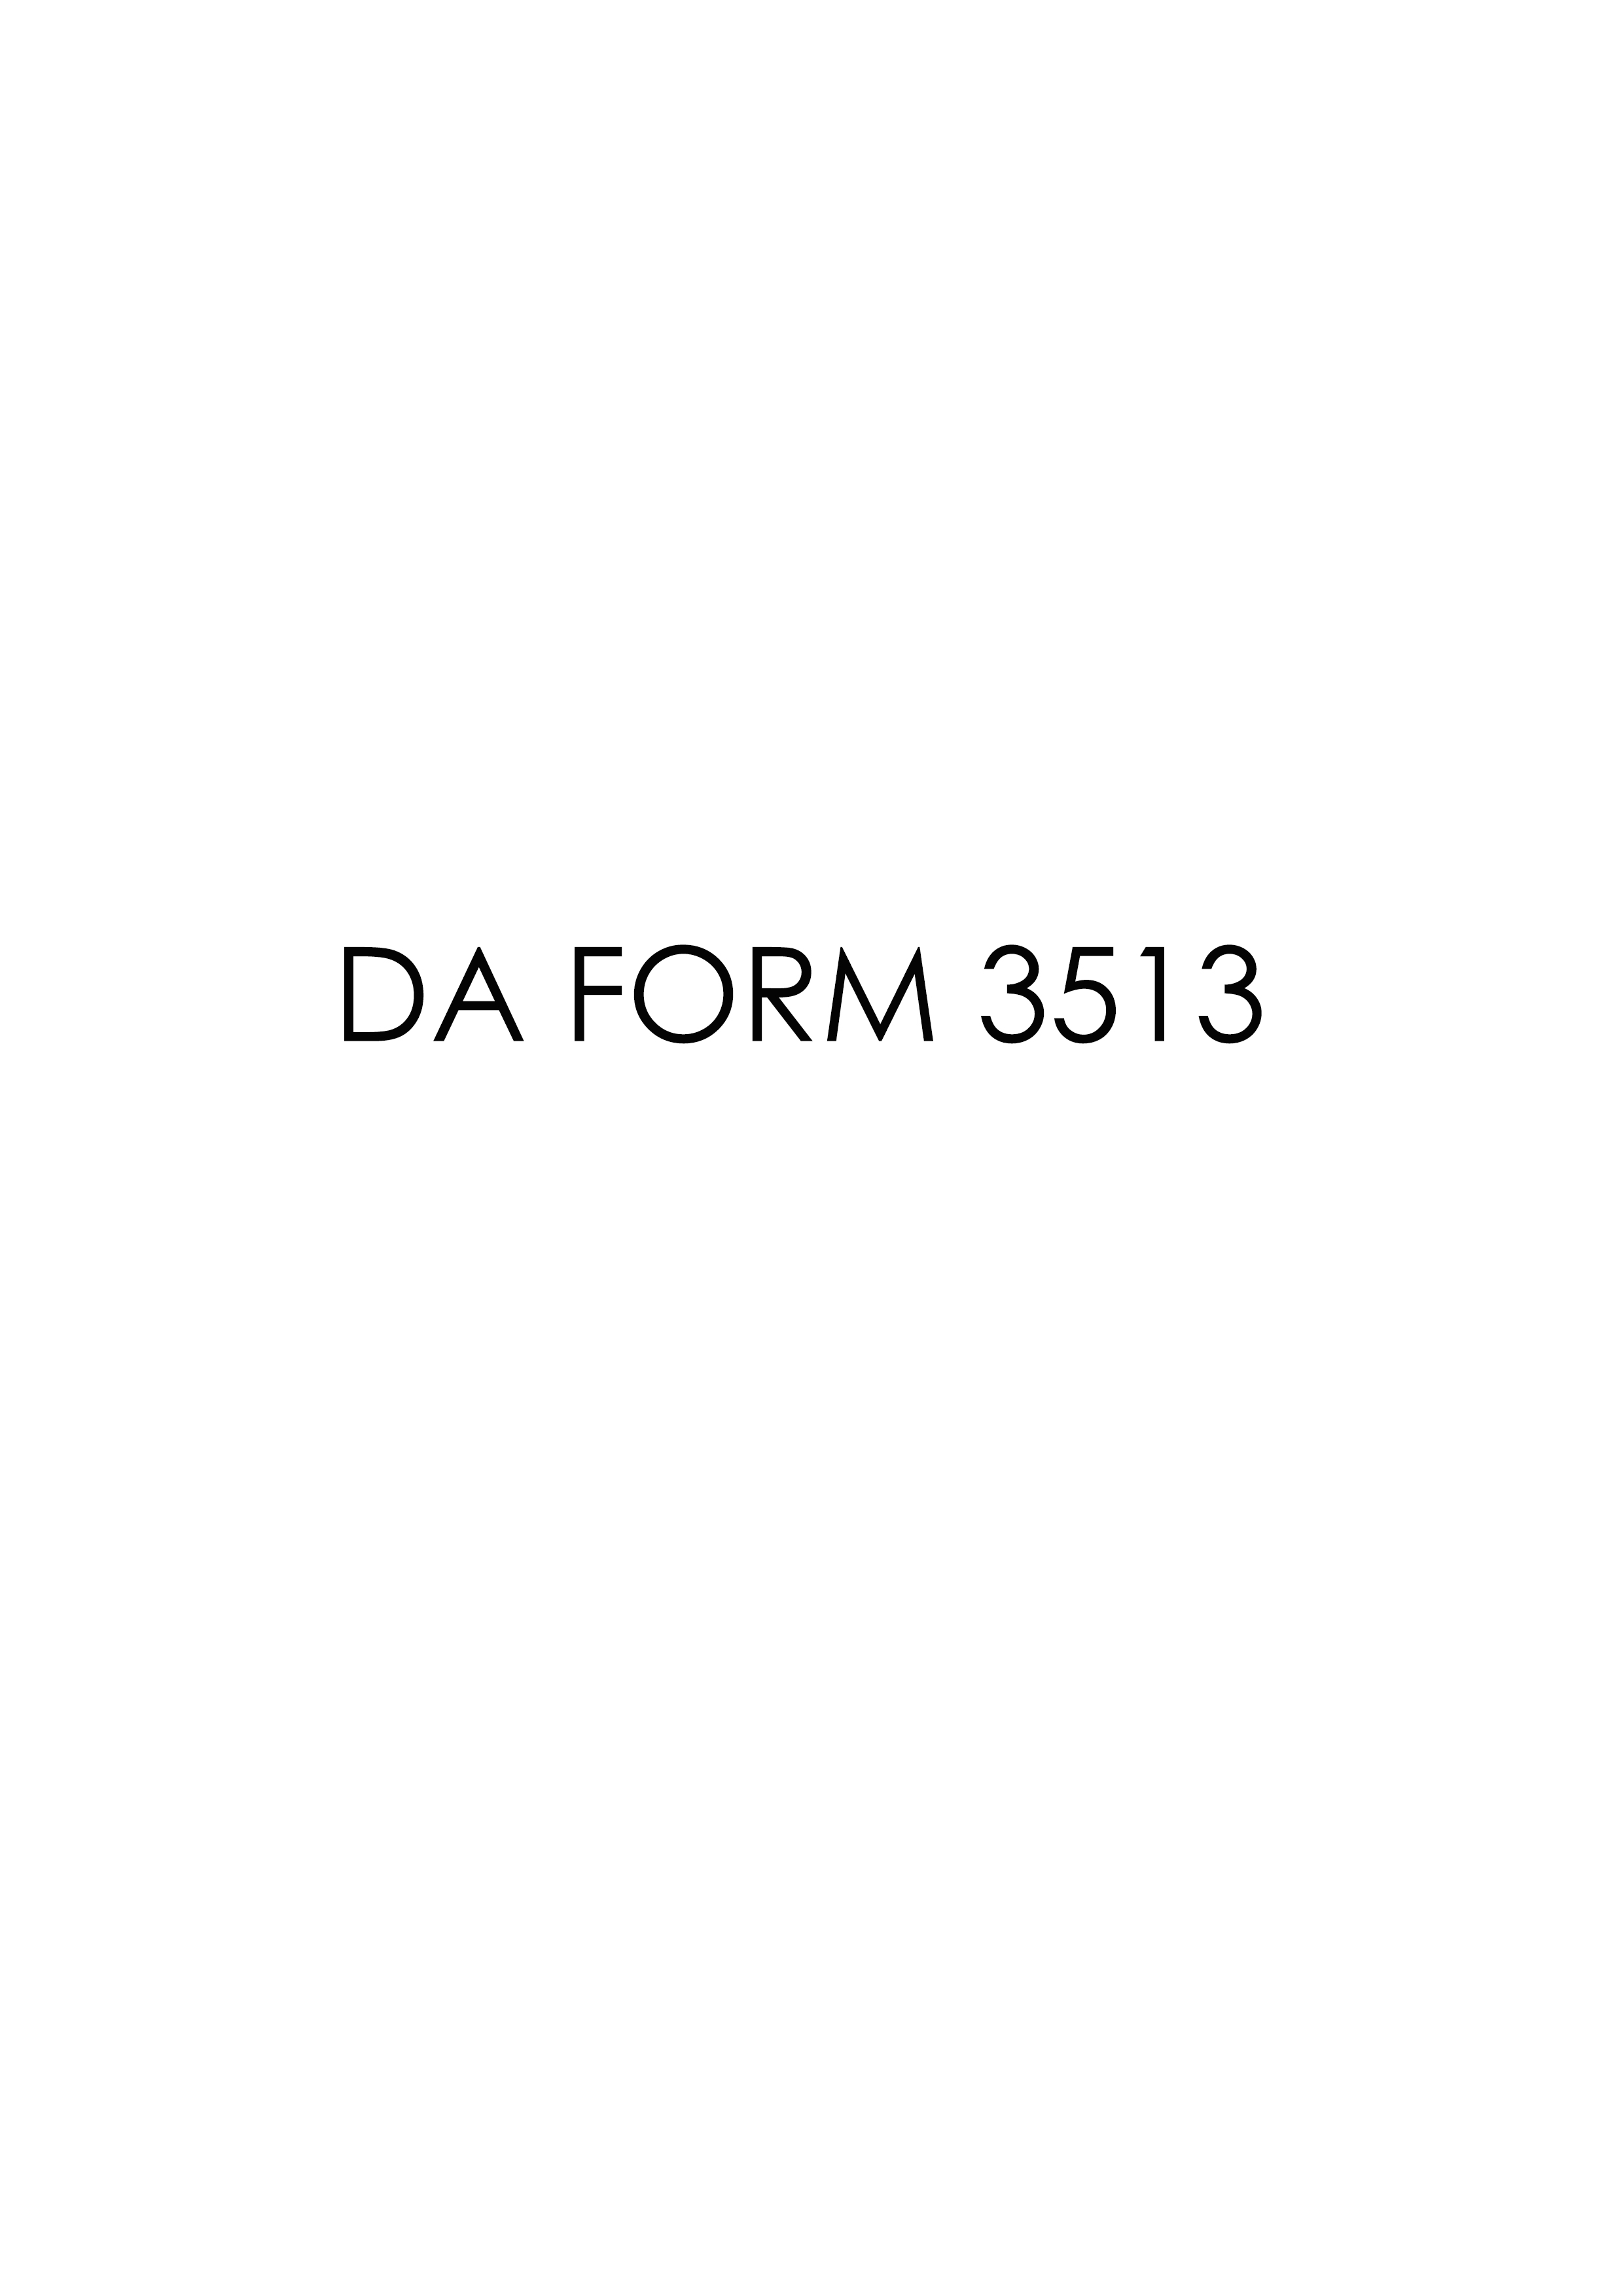 da Form 3513 fillable